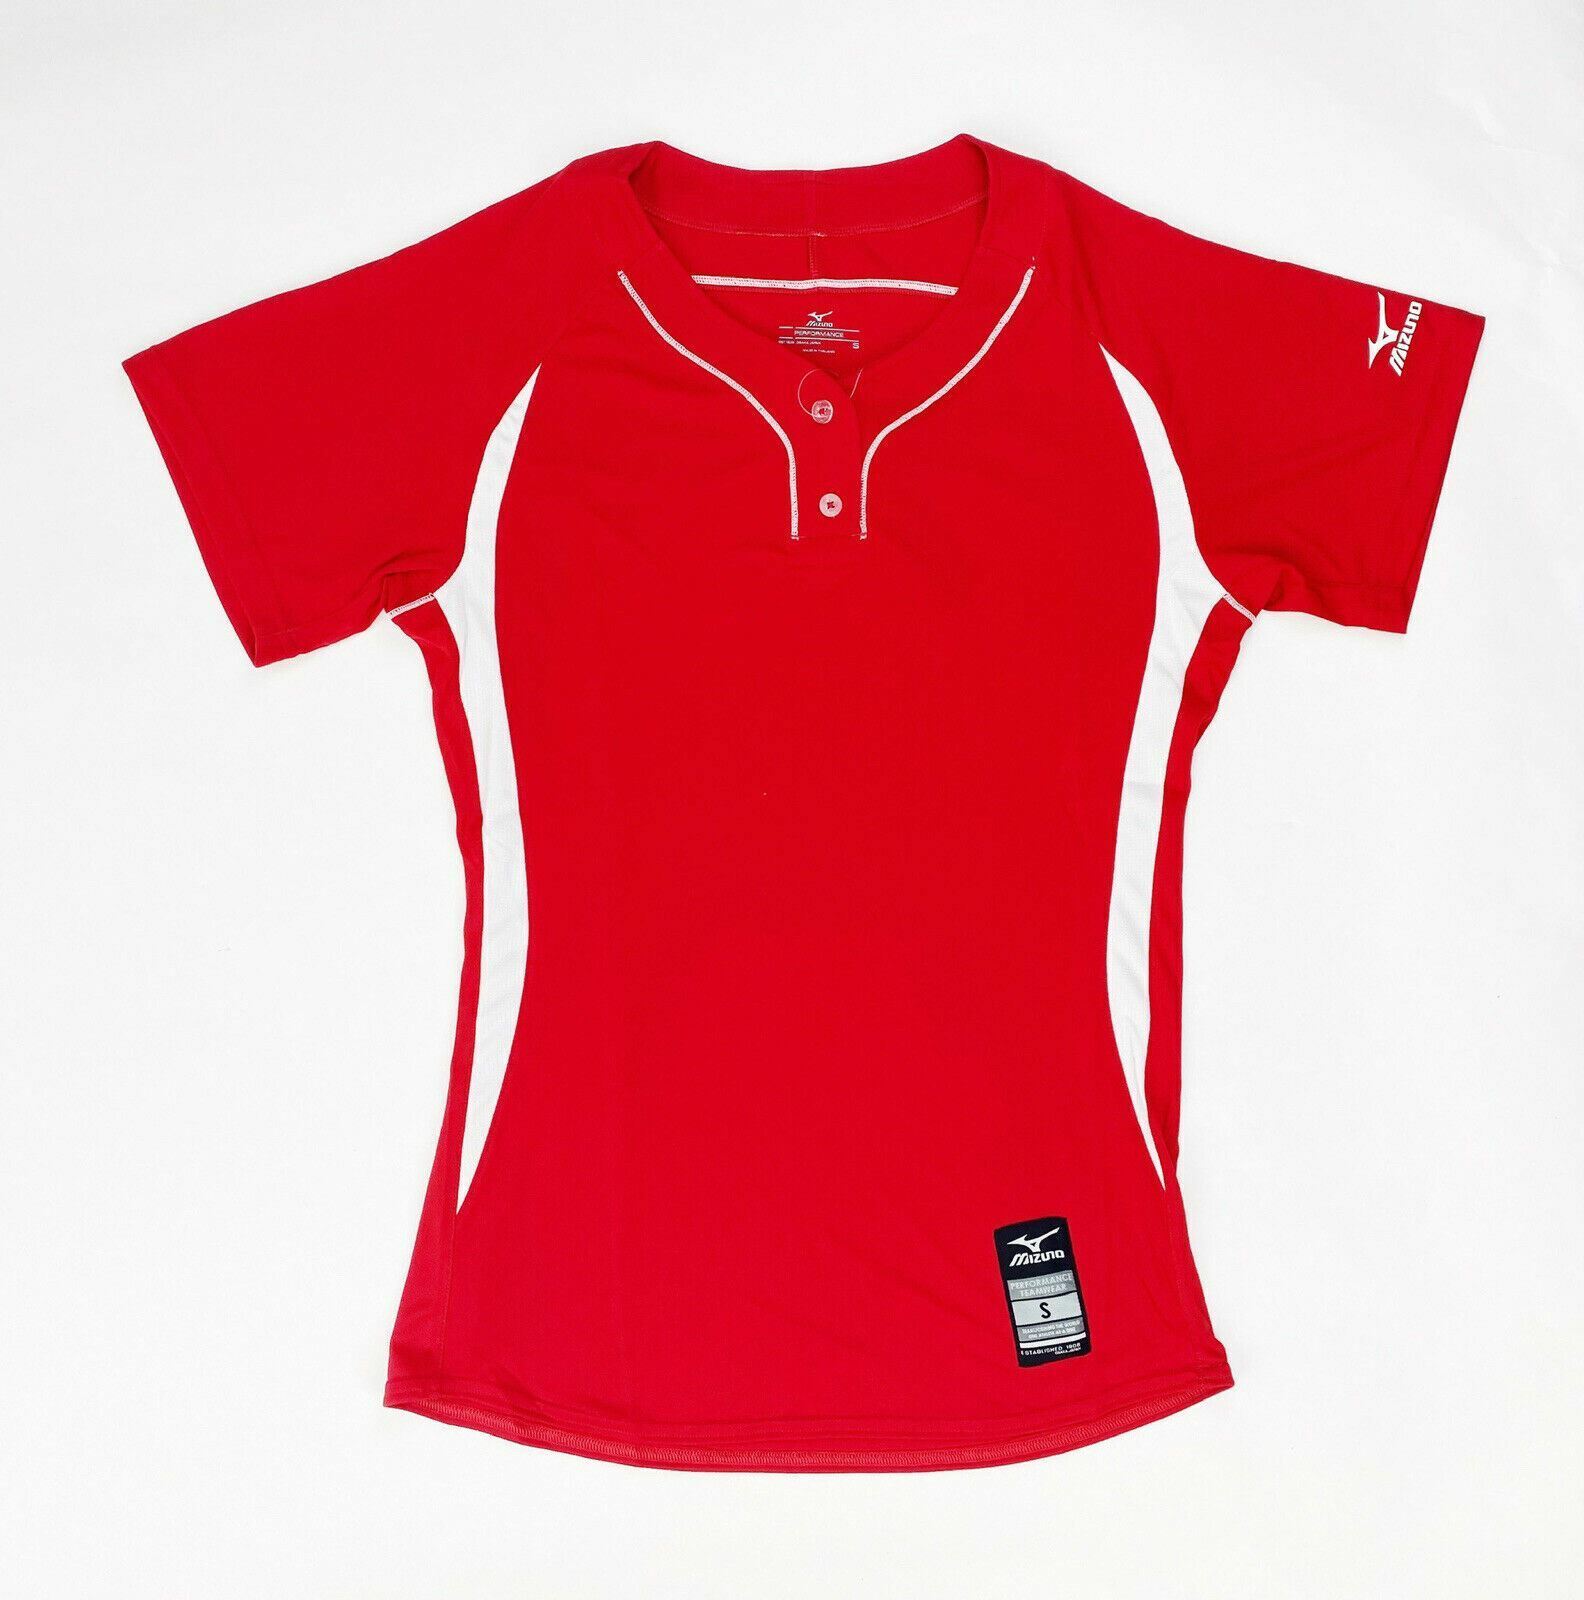 Mizuno Elite Short Sleeve 2-button Game Softball Jersey Women's Small Red 350603